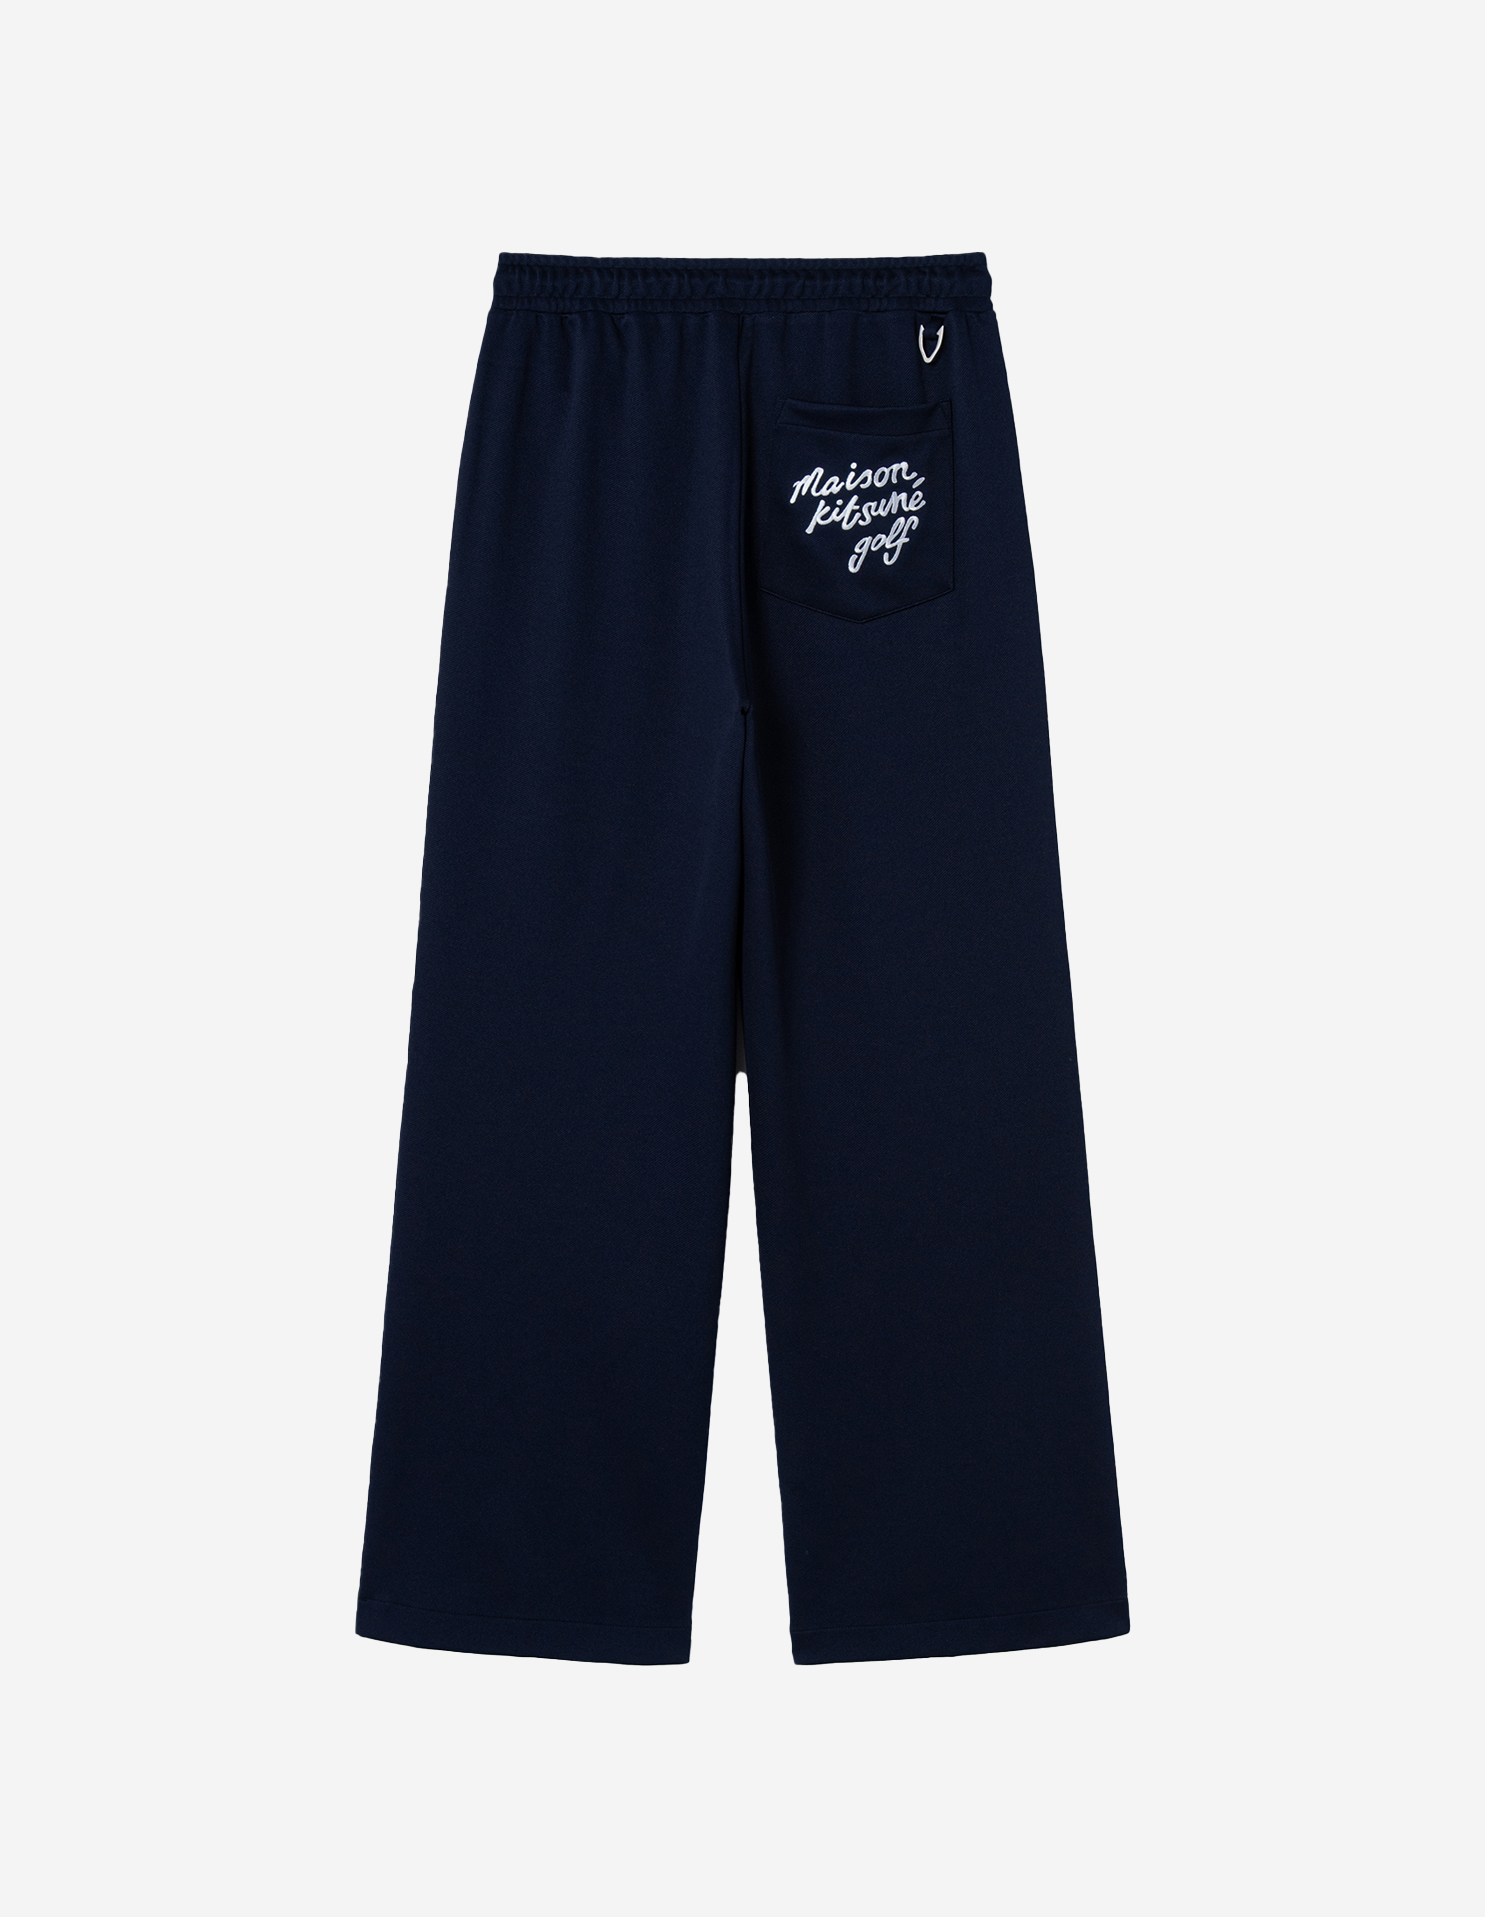 MAISON KITSUNE shorts (navy)40 - パンツ